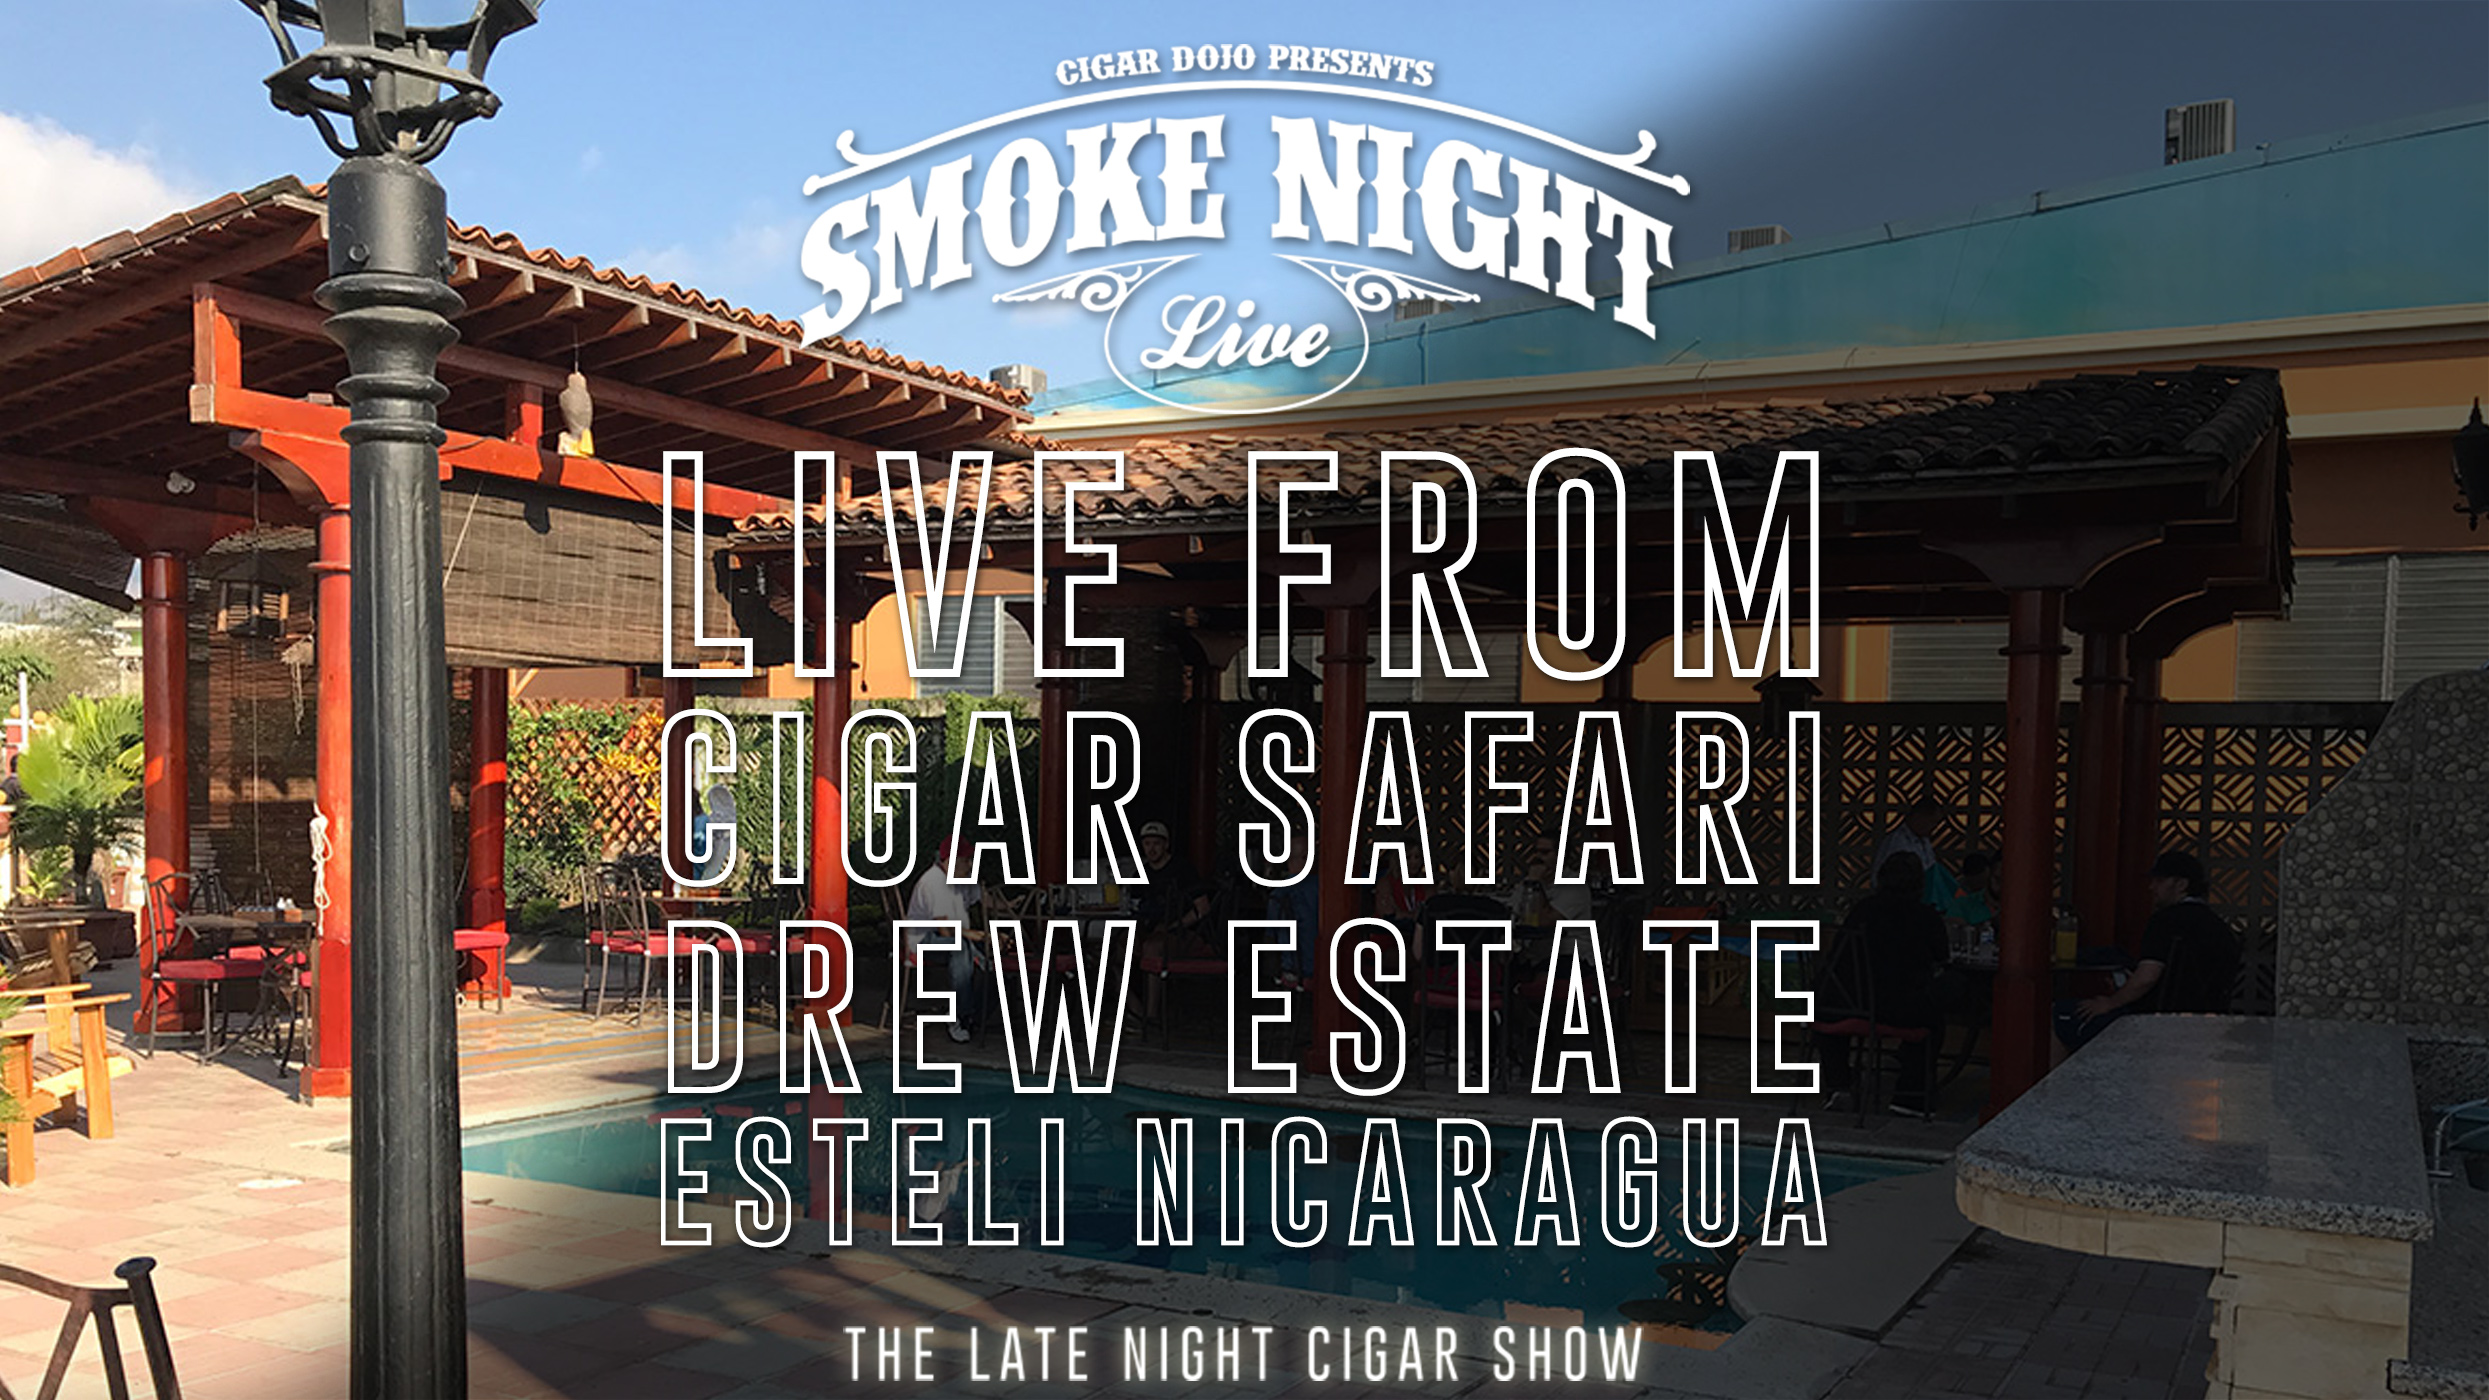 Cigar Safari Drew Estate